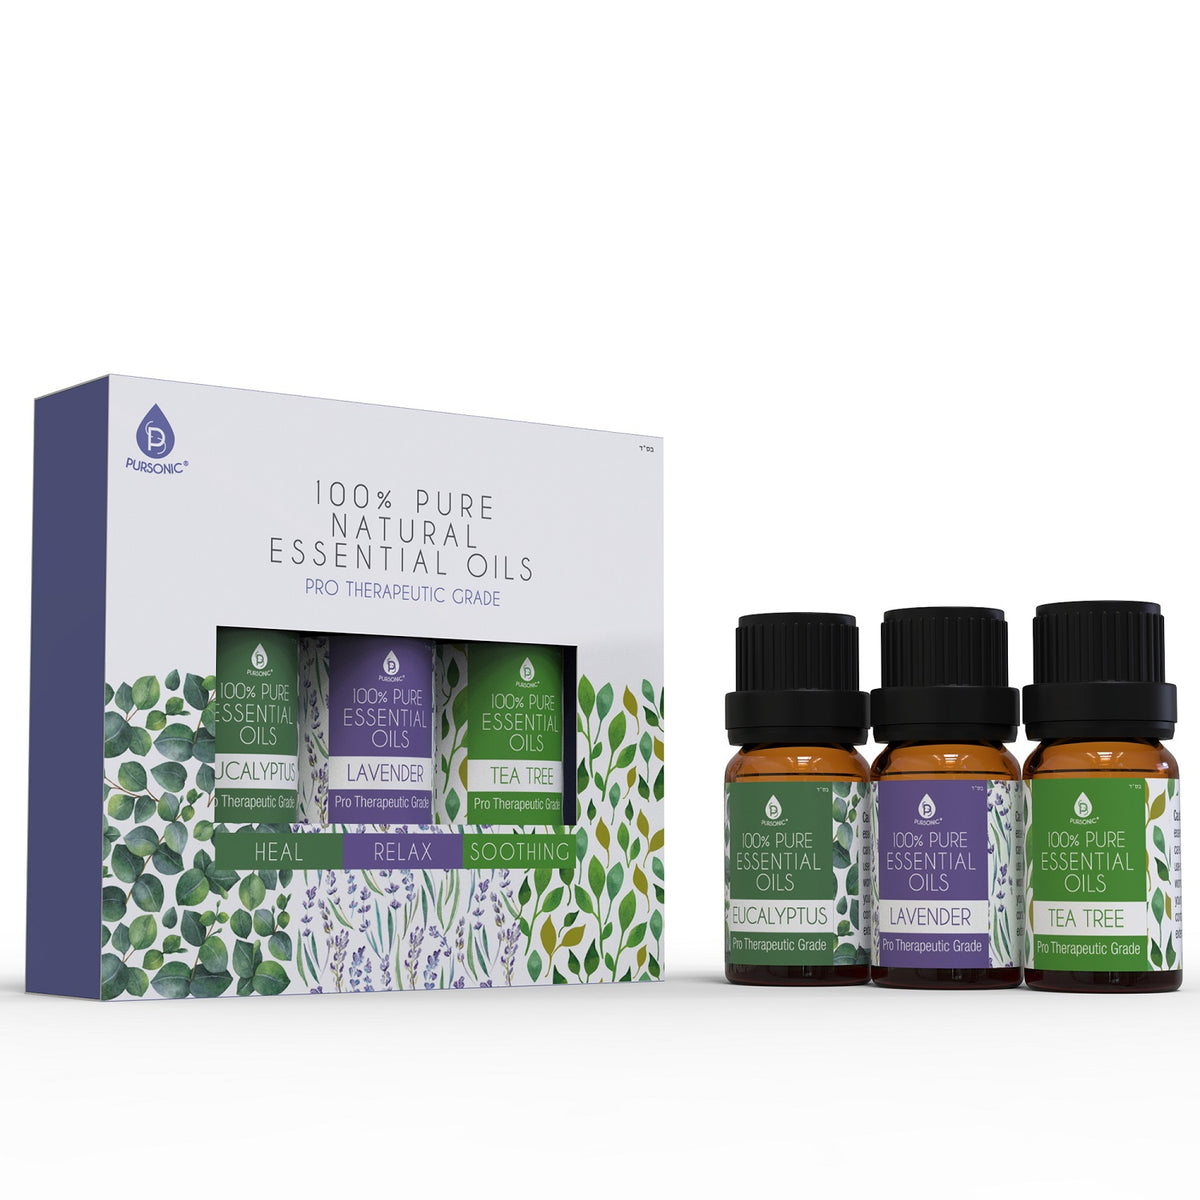 PURSONIC 100% Pure Essential Aromatherapy Oils - Multi - 188 requests